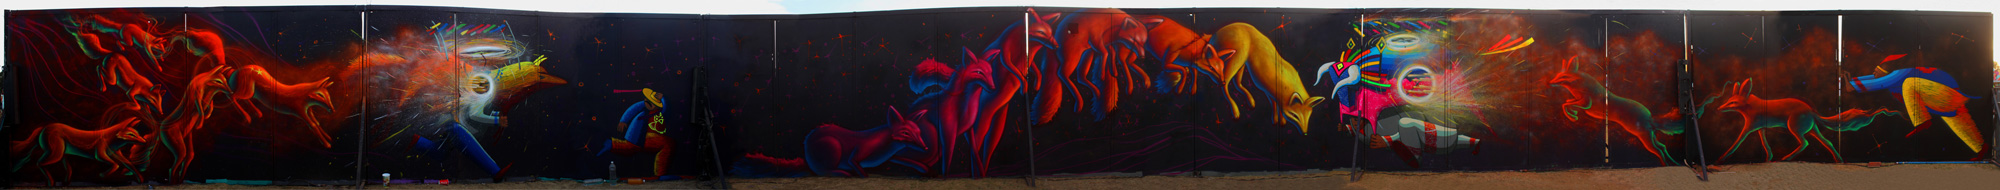 brooklyn-street-art-2000pxl-spaik-libre-mexico-city-03-14-5